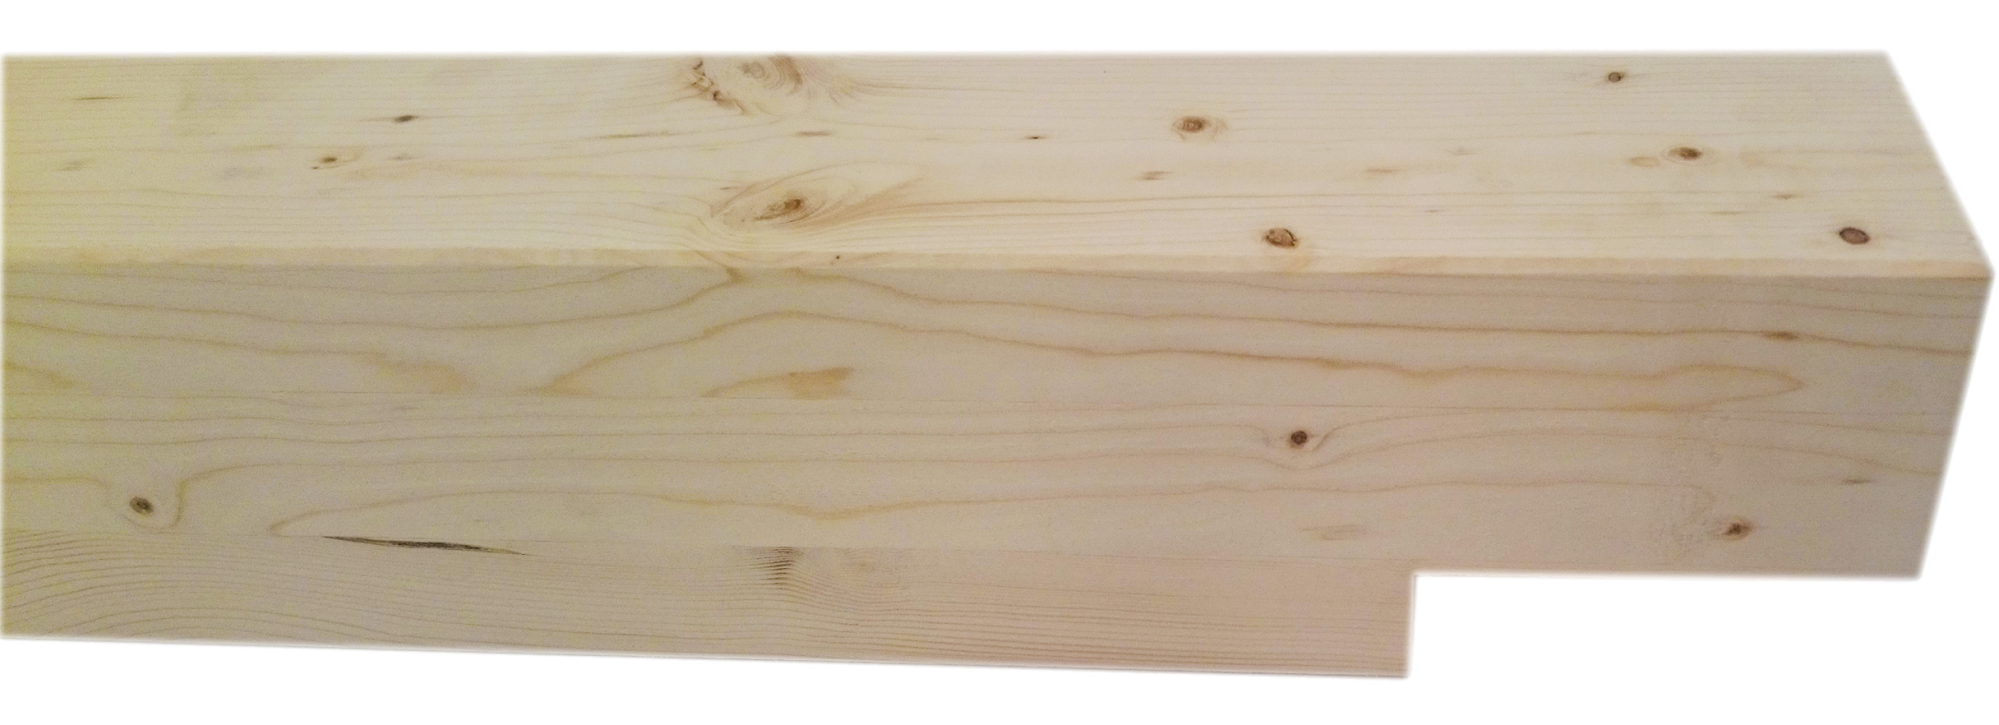 Poste laminado madera de abeto 12 x 240 x 12 cm testa 6 x 12